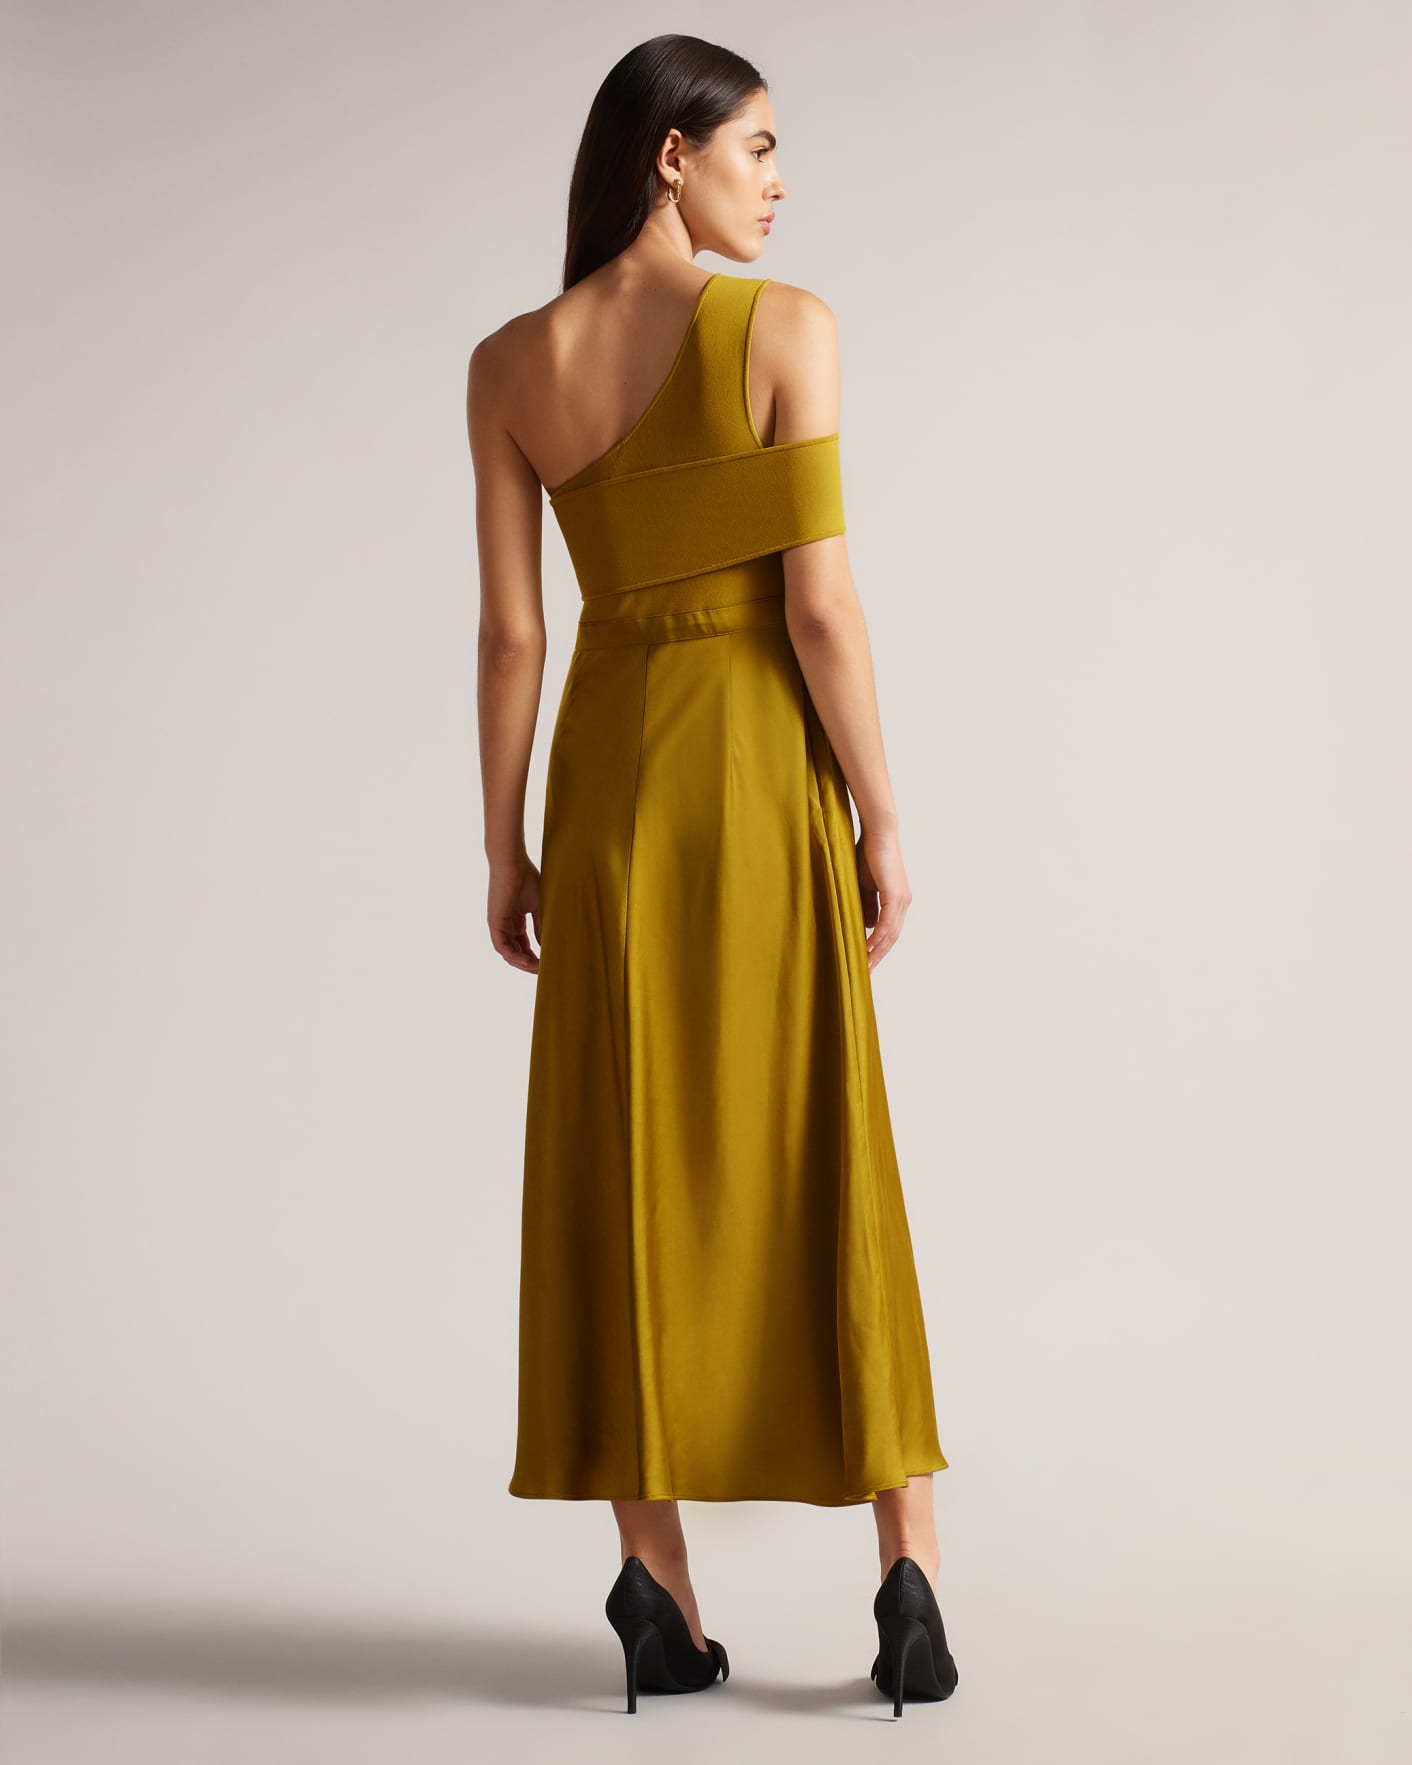 Medium Yellow Asymmetric Knit Bodice Dress With Satin Skirt Ted Baker